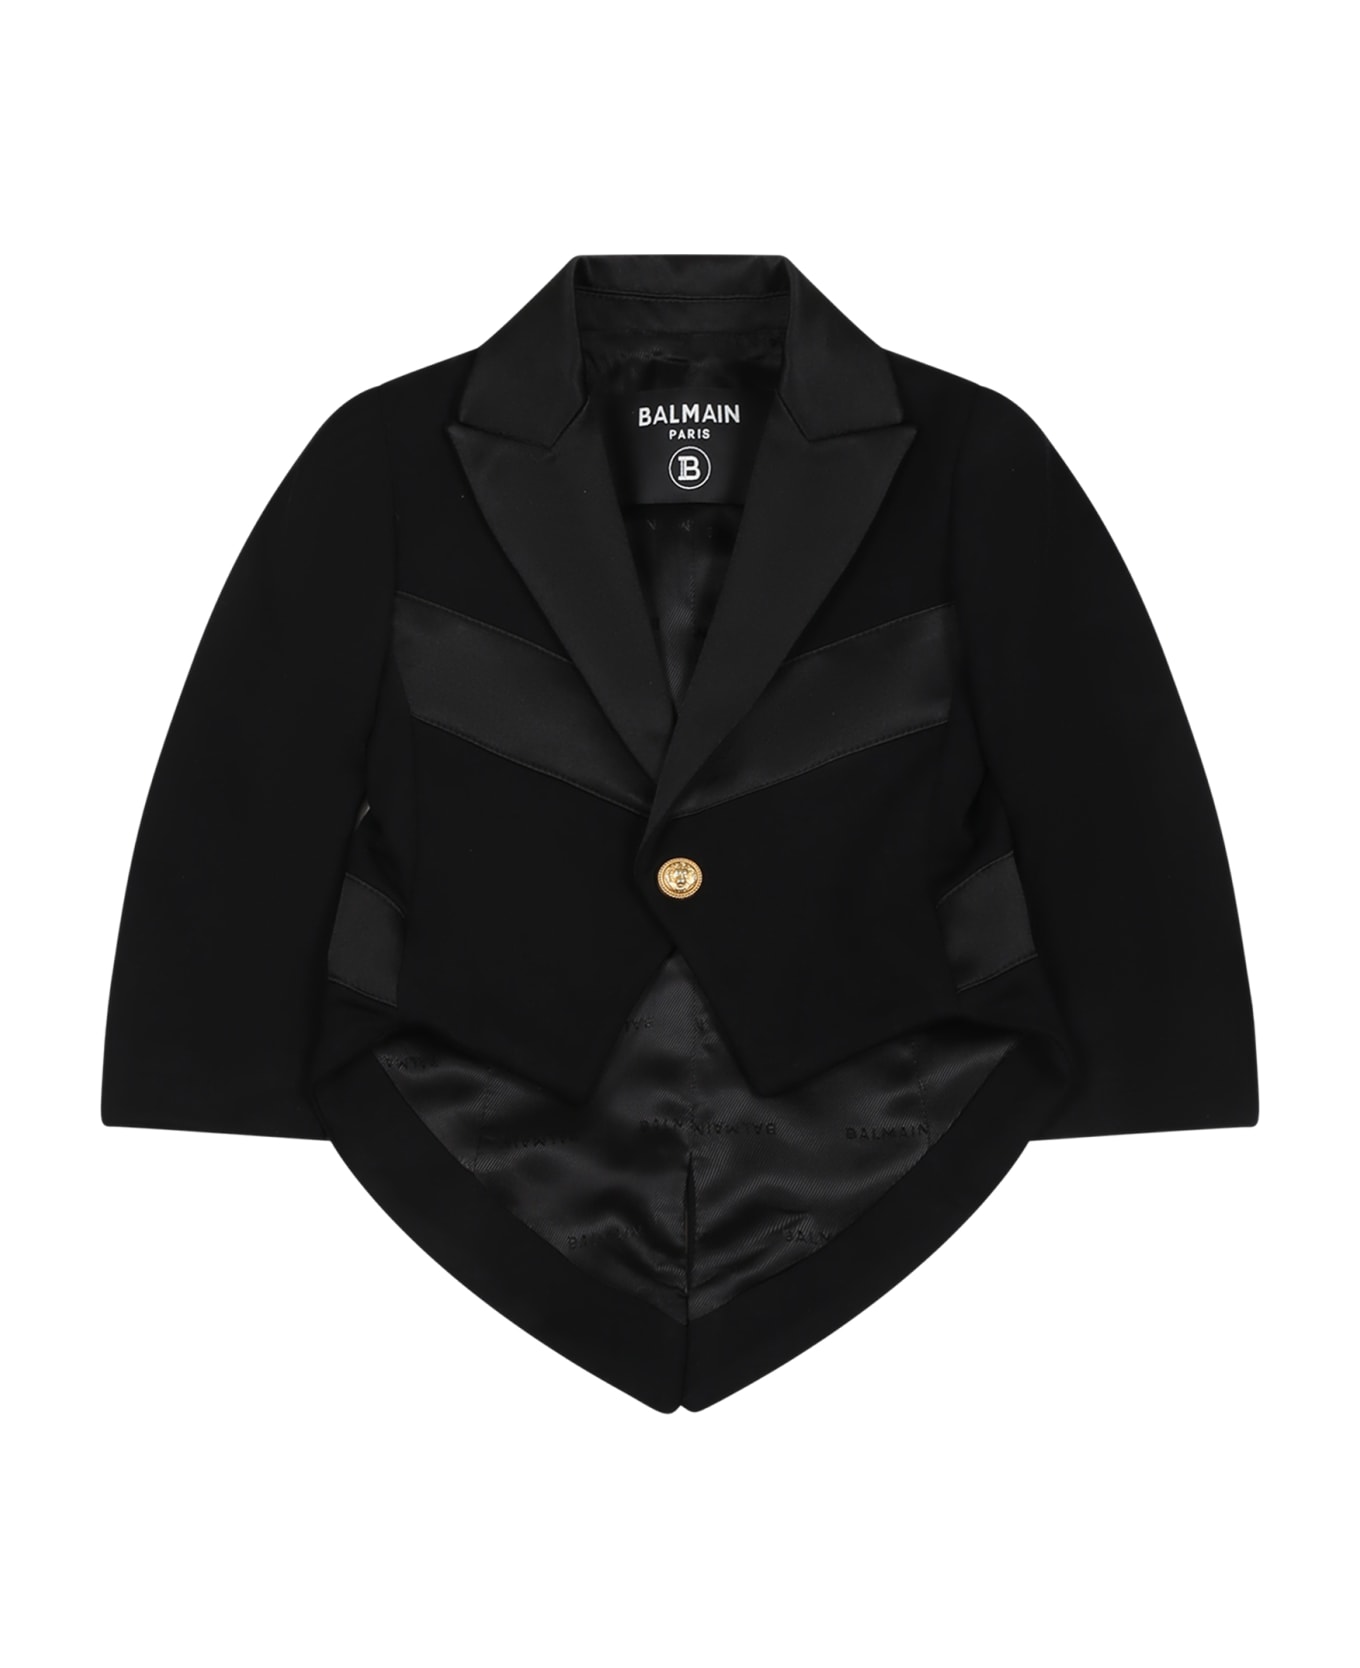 Balmain Black Jacket For Baby Boy - Black